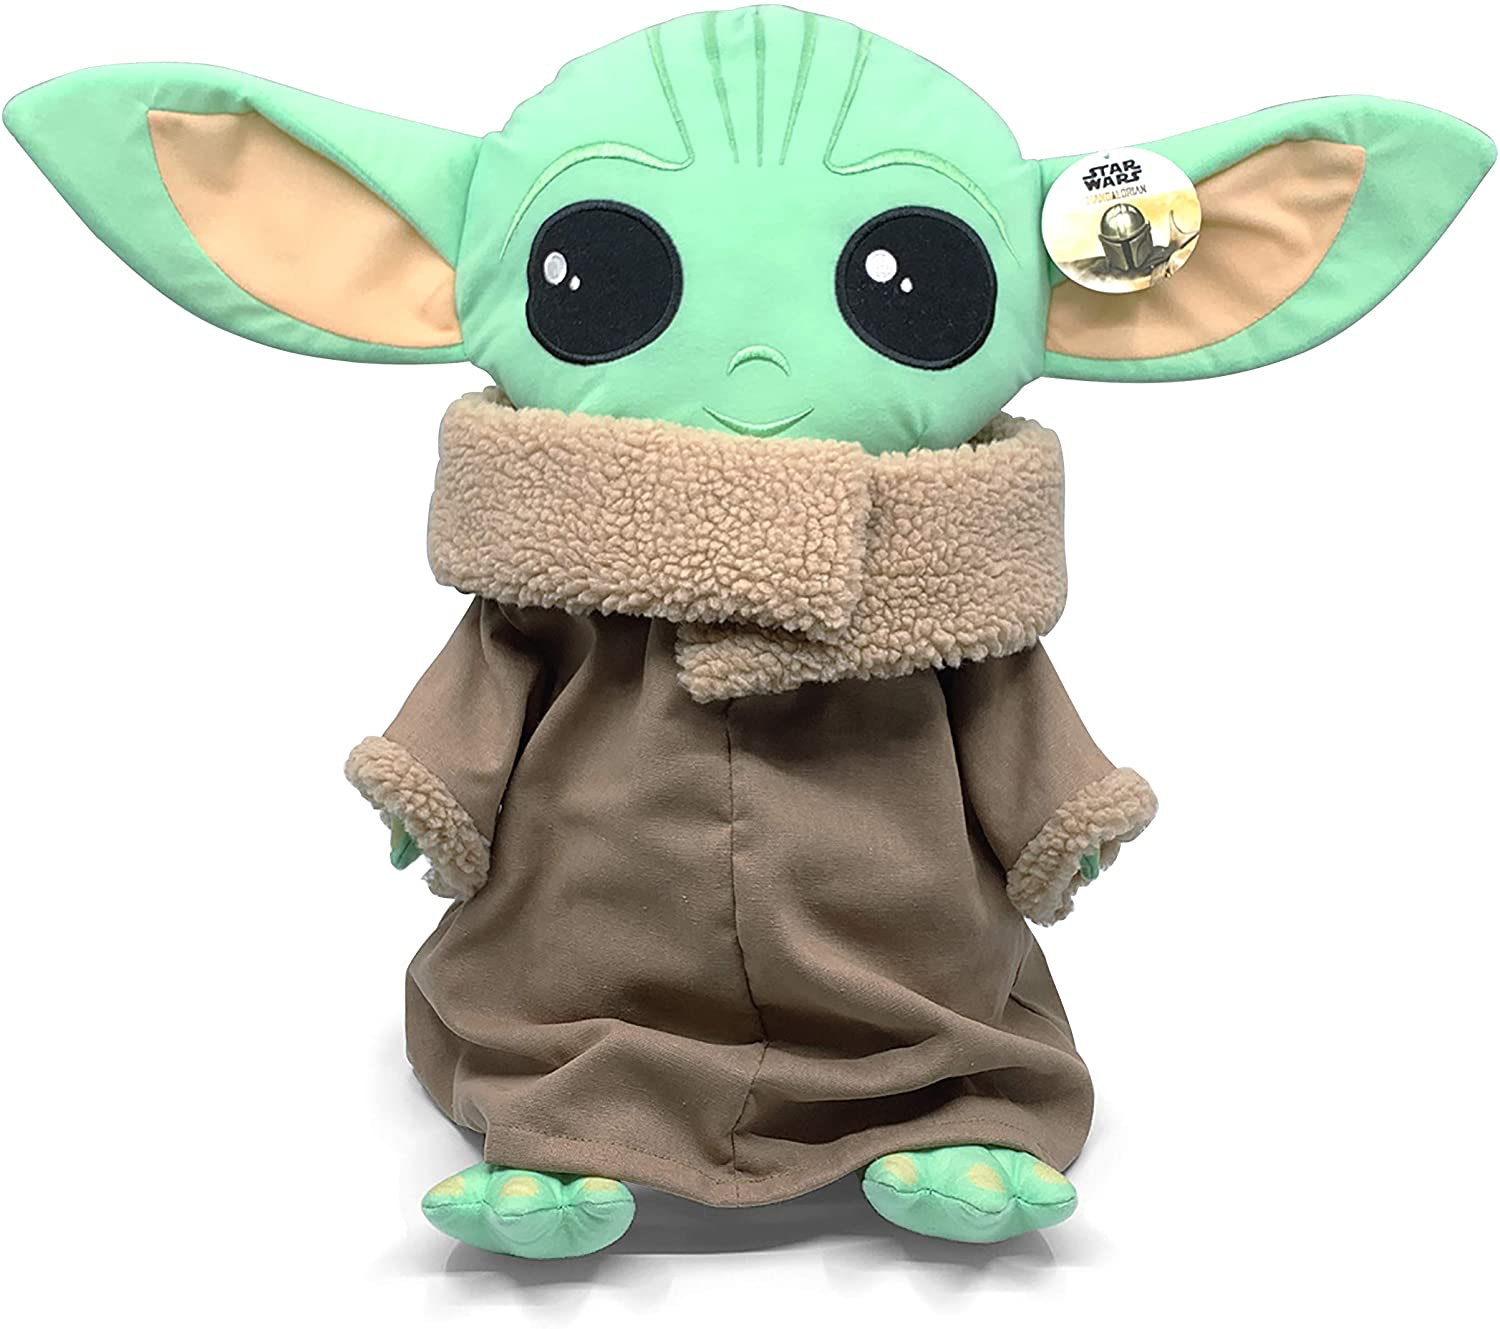 TM Baby Yoda (The Child) Plush Pillow